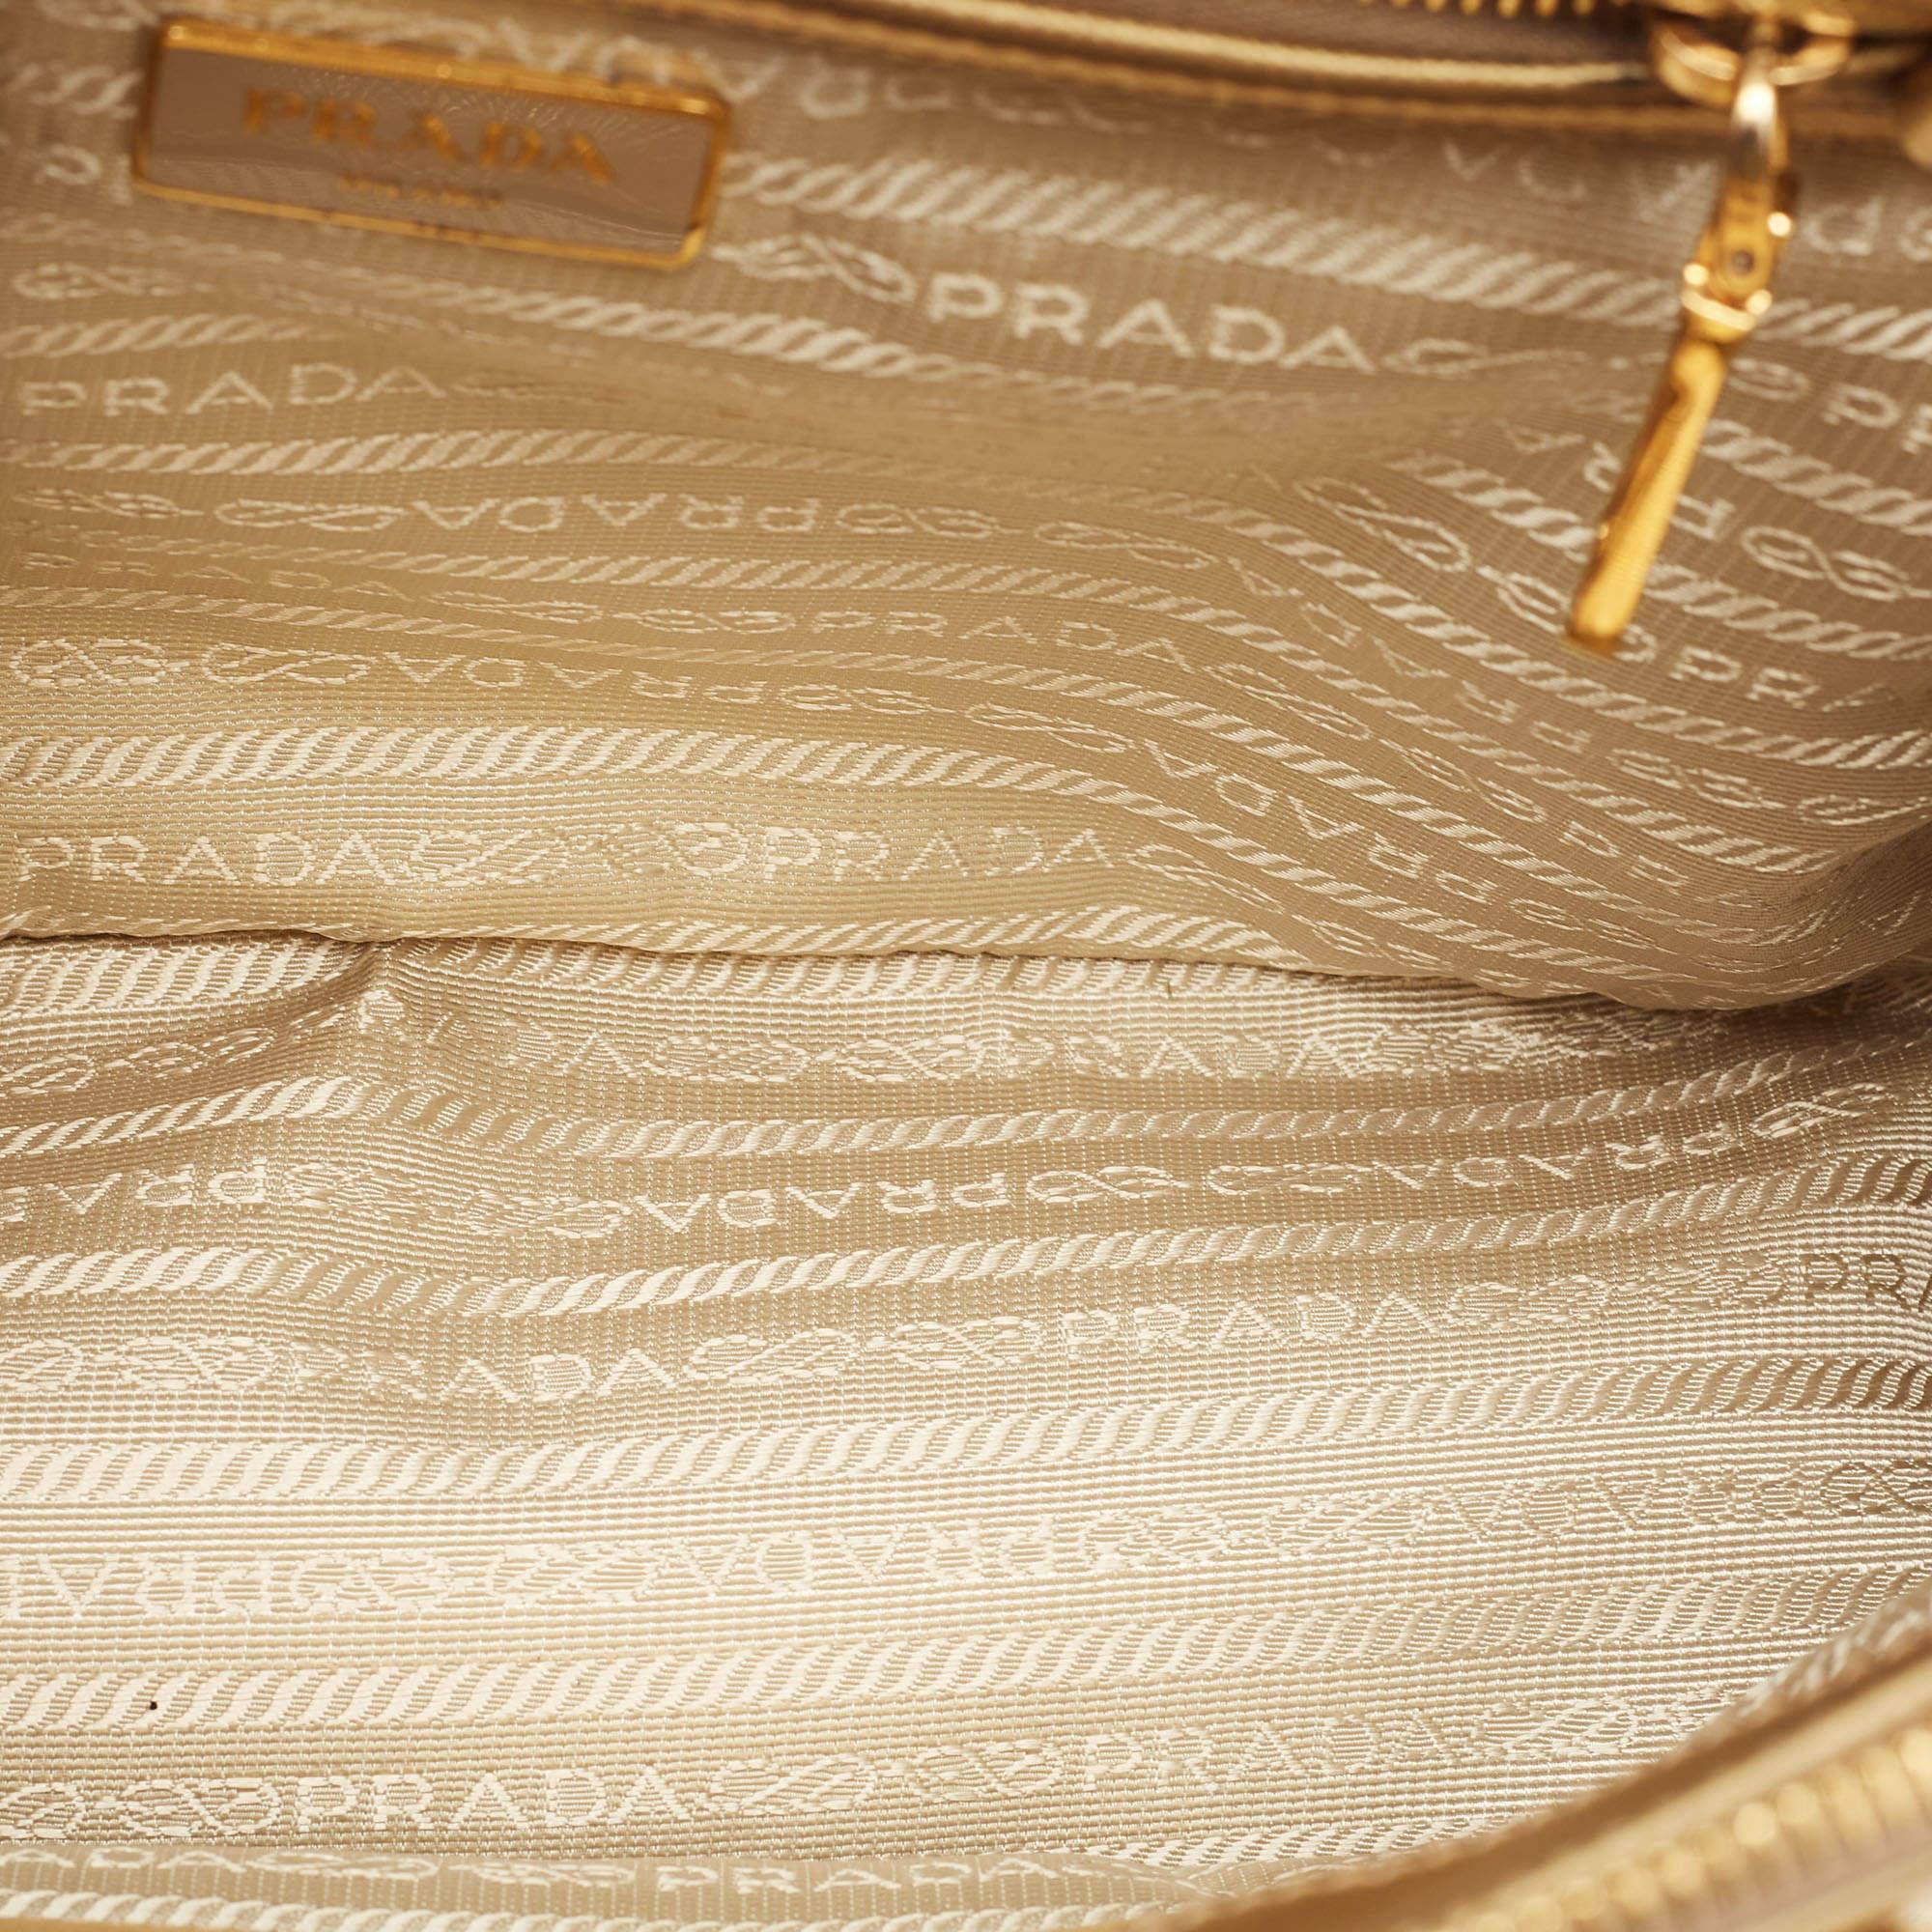 Prada Gold Saffiano Lux Leather Small Double Zip Tote For Sale 2